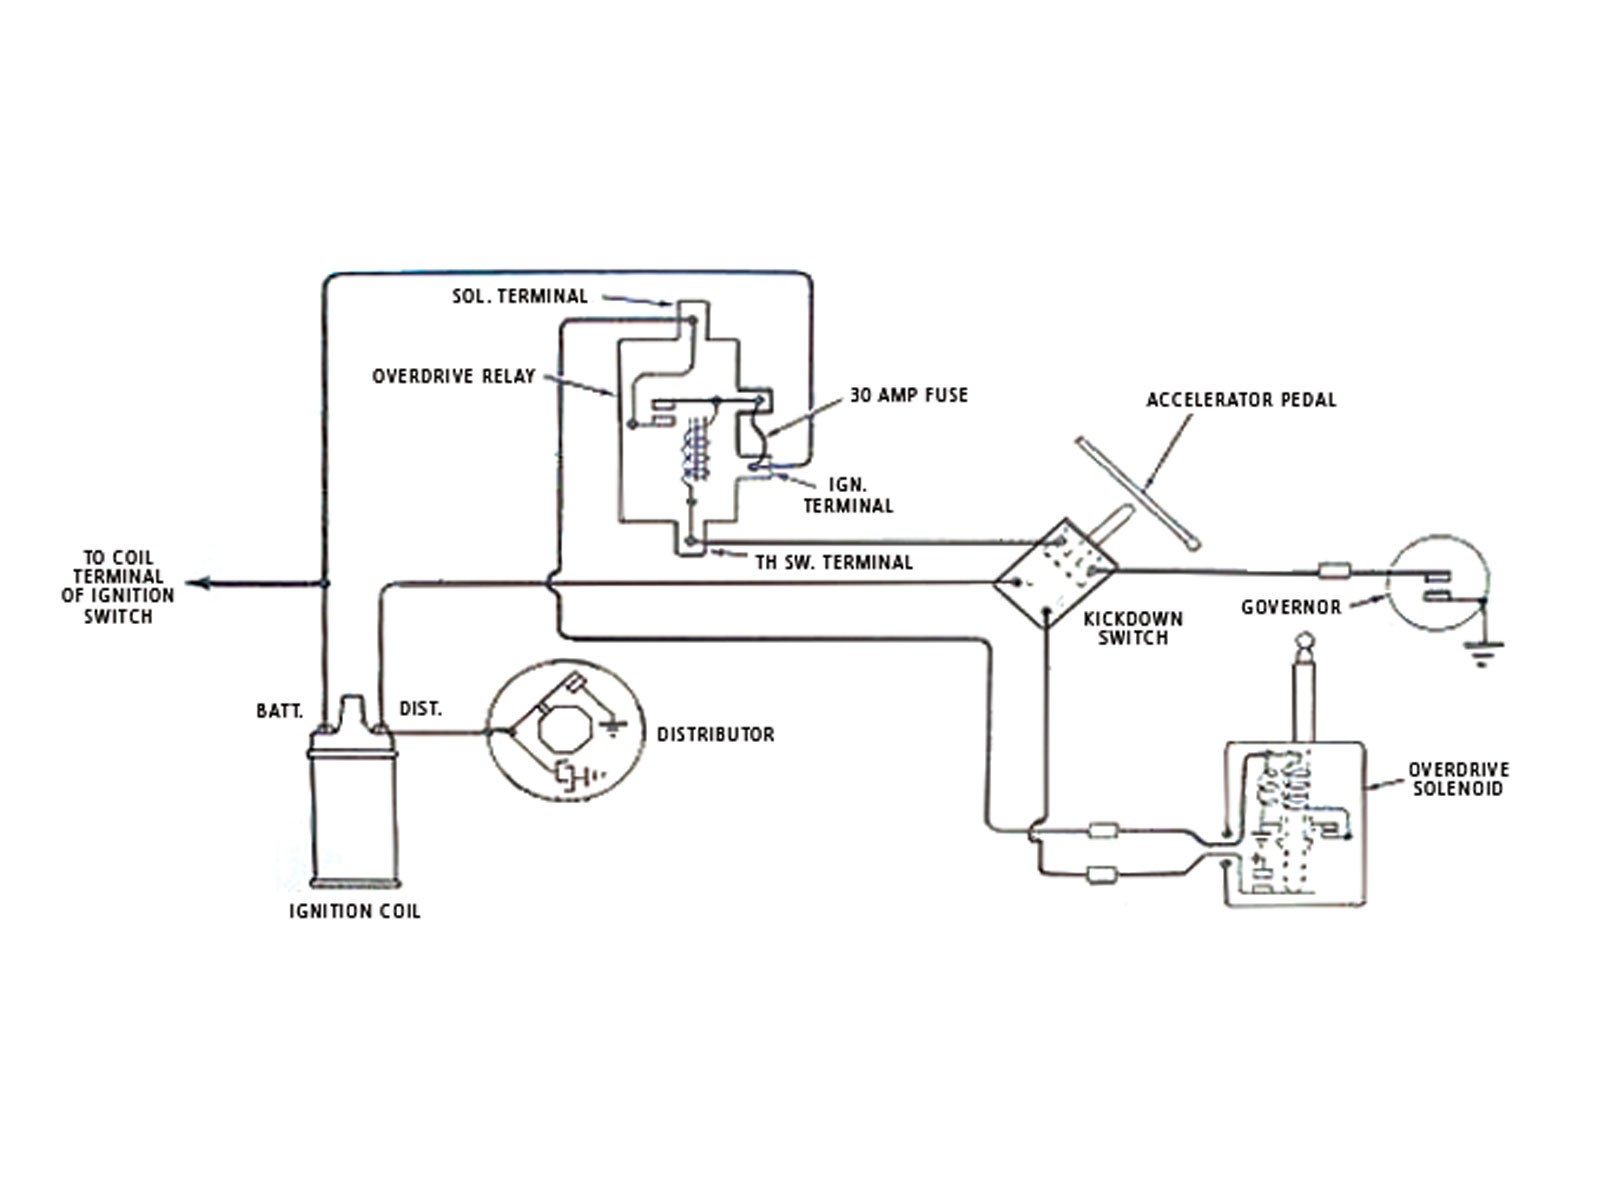 Hazard Relay Wiring Diagram Best Wiring Diagram Turn Signal Relay Save Wiring Diagram Flasher Relay